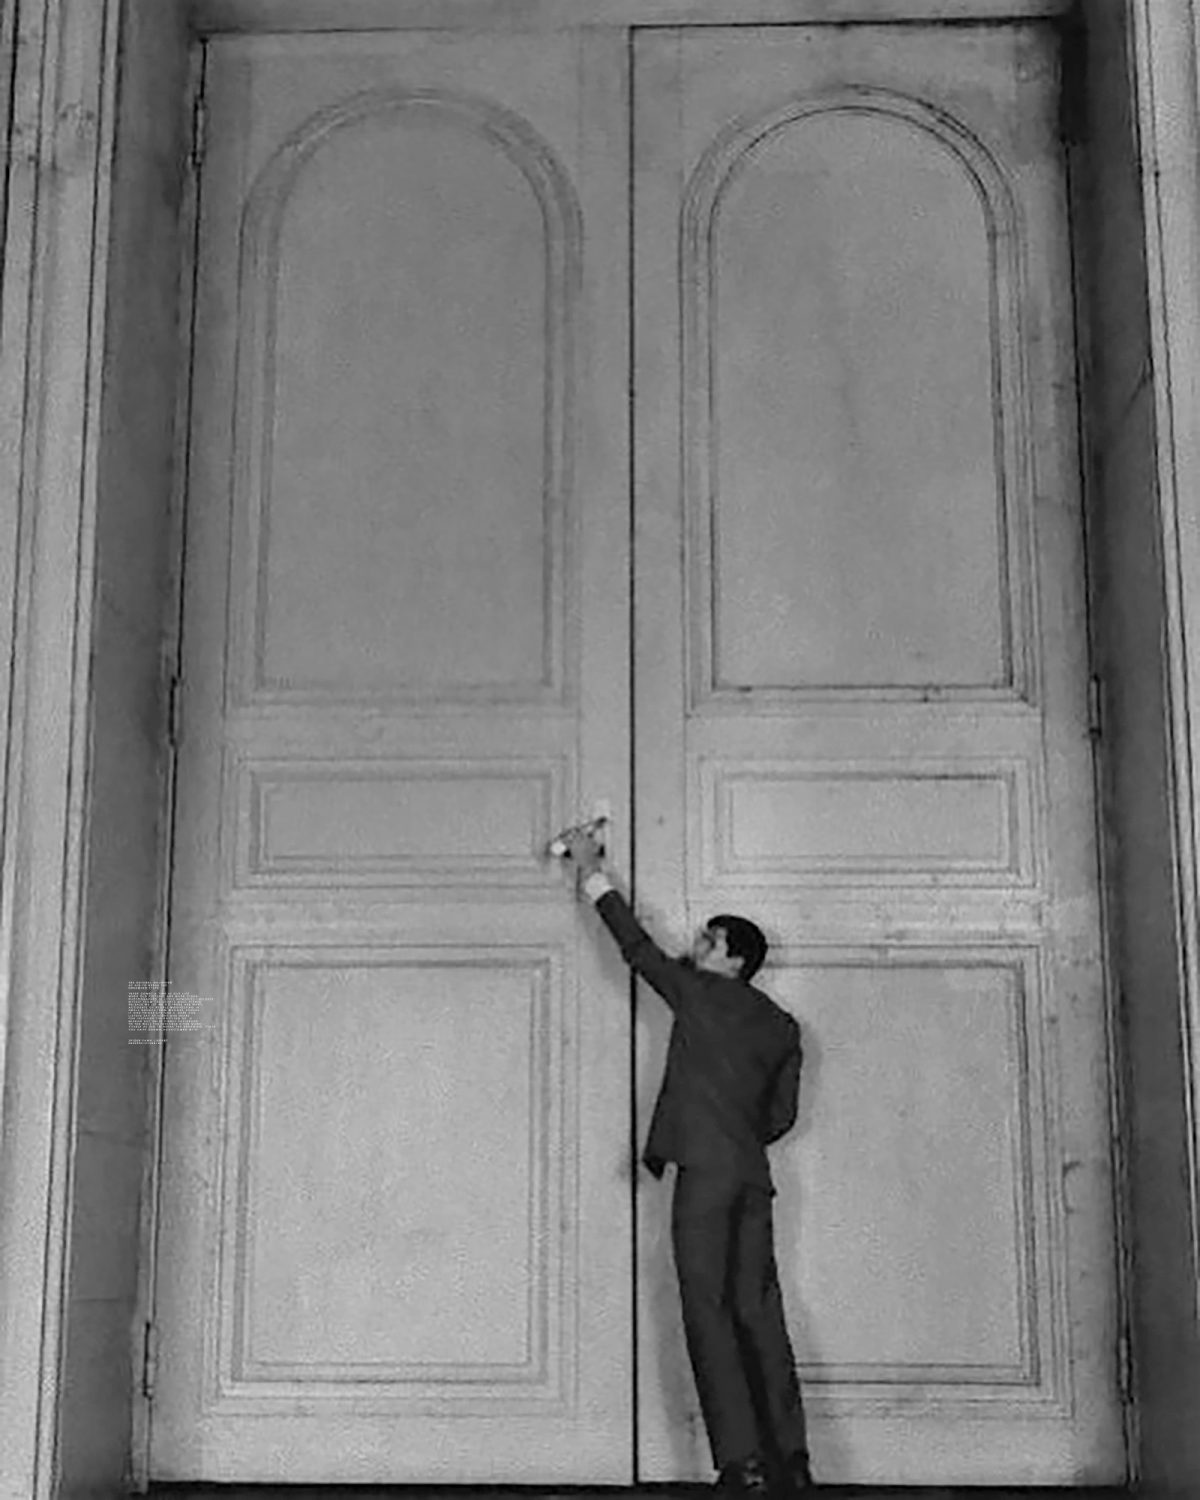 Anthony Perkins, Orson Welles, The Trial, film, 1960s, Franz Kafka